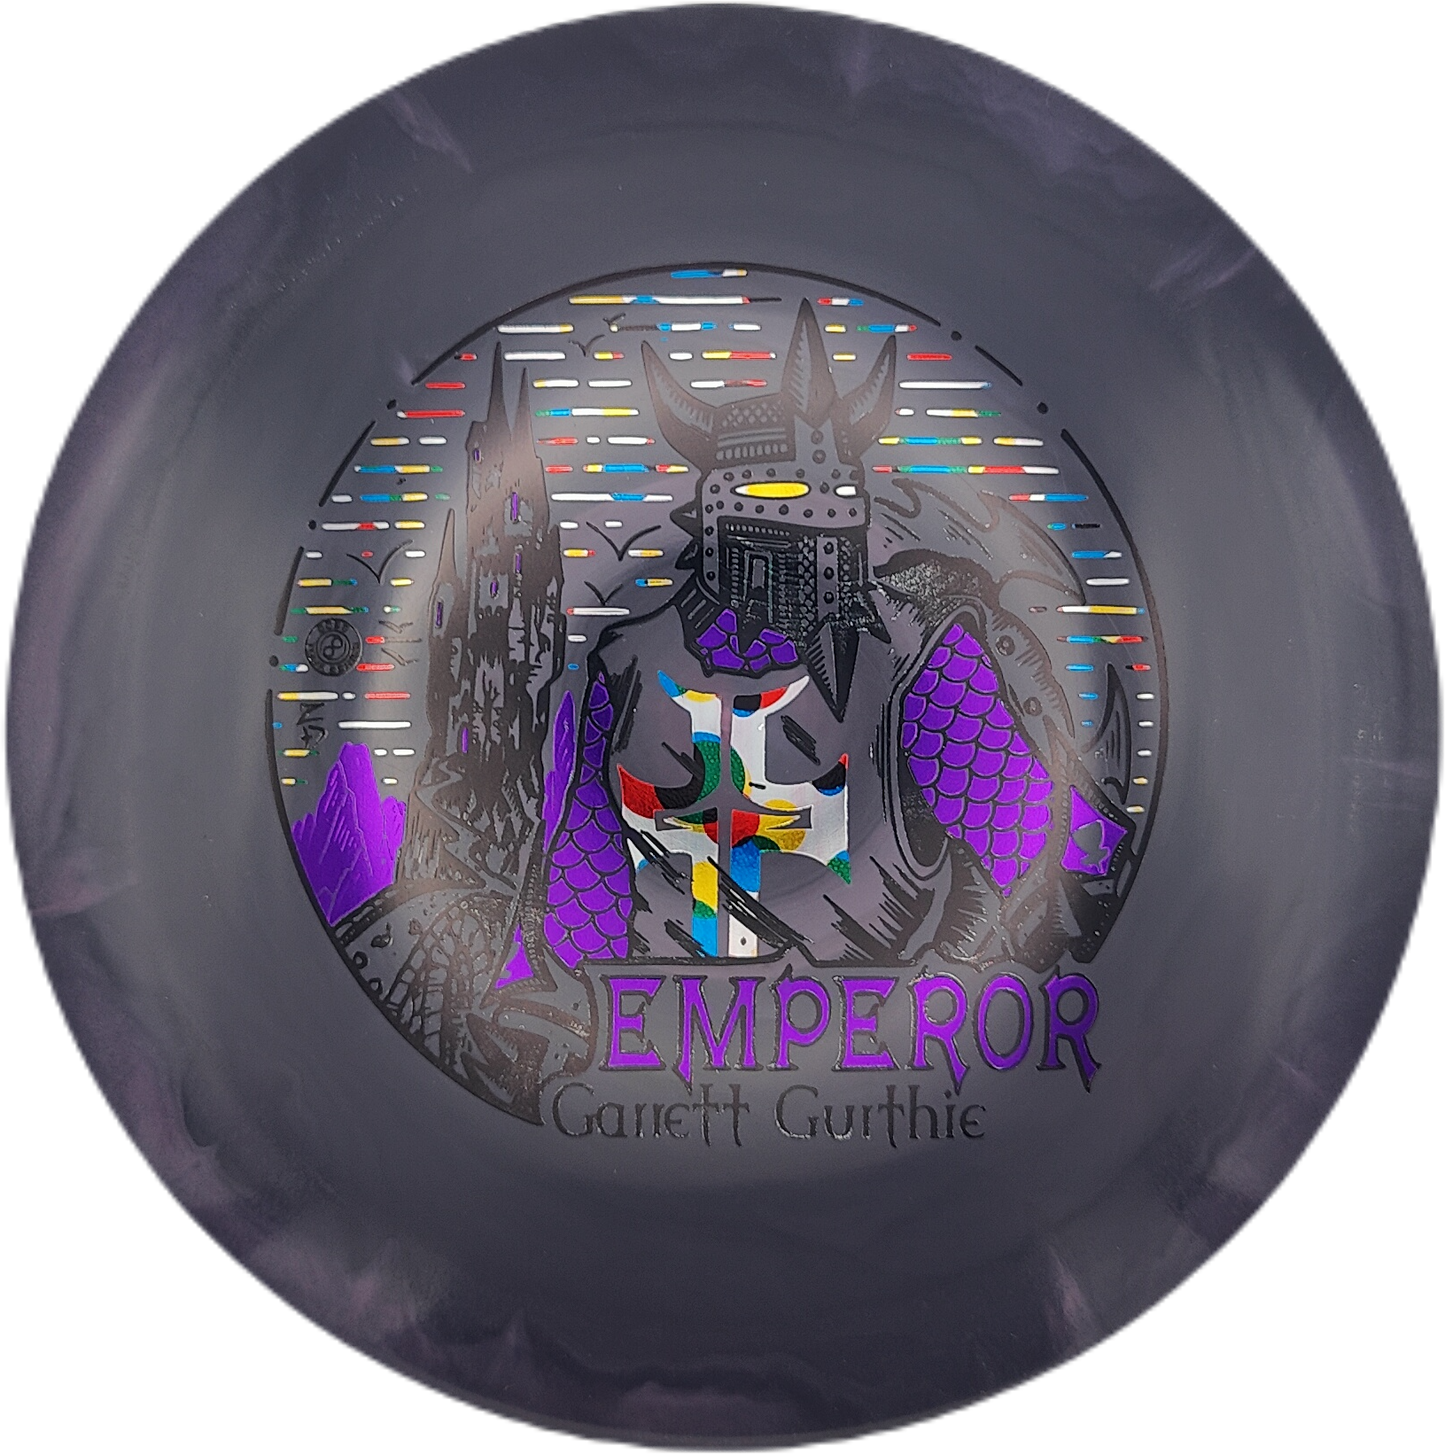 Infinite Discs Emperor Swirly S-Blend Signature Garret Gurthie